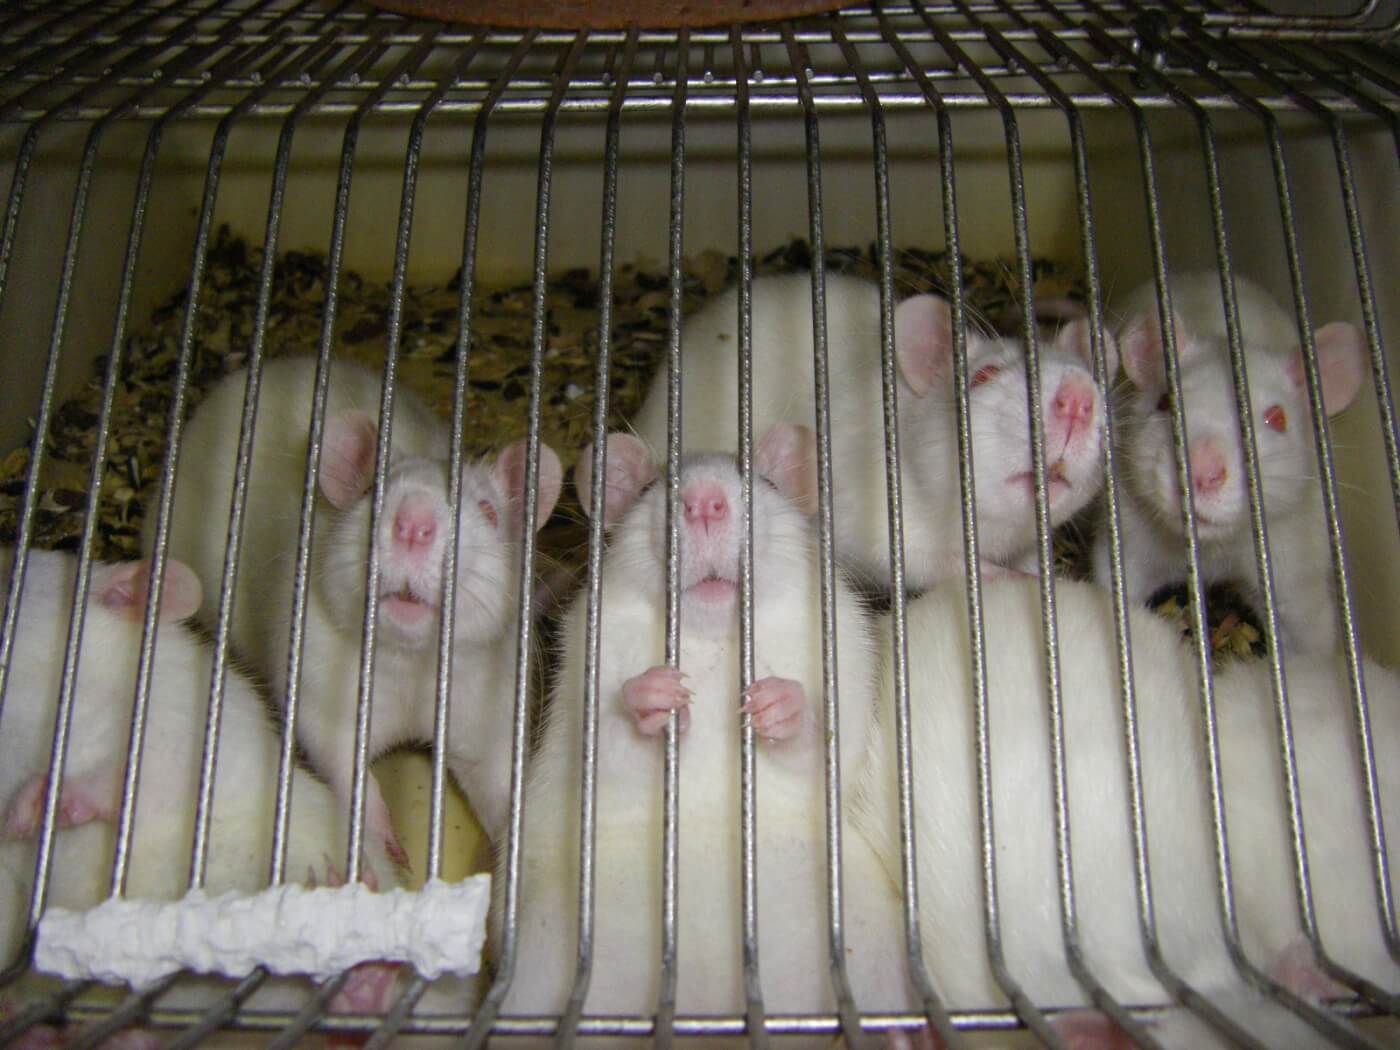 Progress! FDA Studying ‘Organs-on-Chips’ to Replace Tests on Animals | Blog | PETA Latino